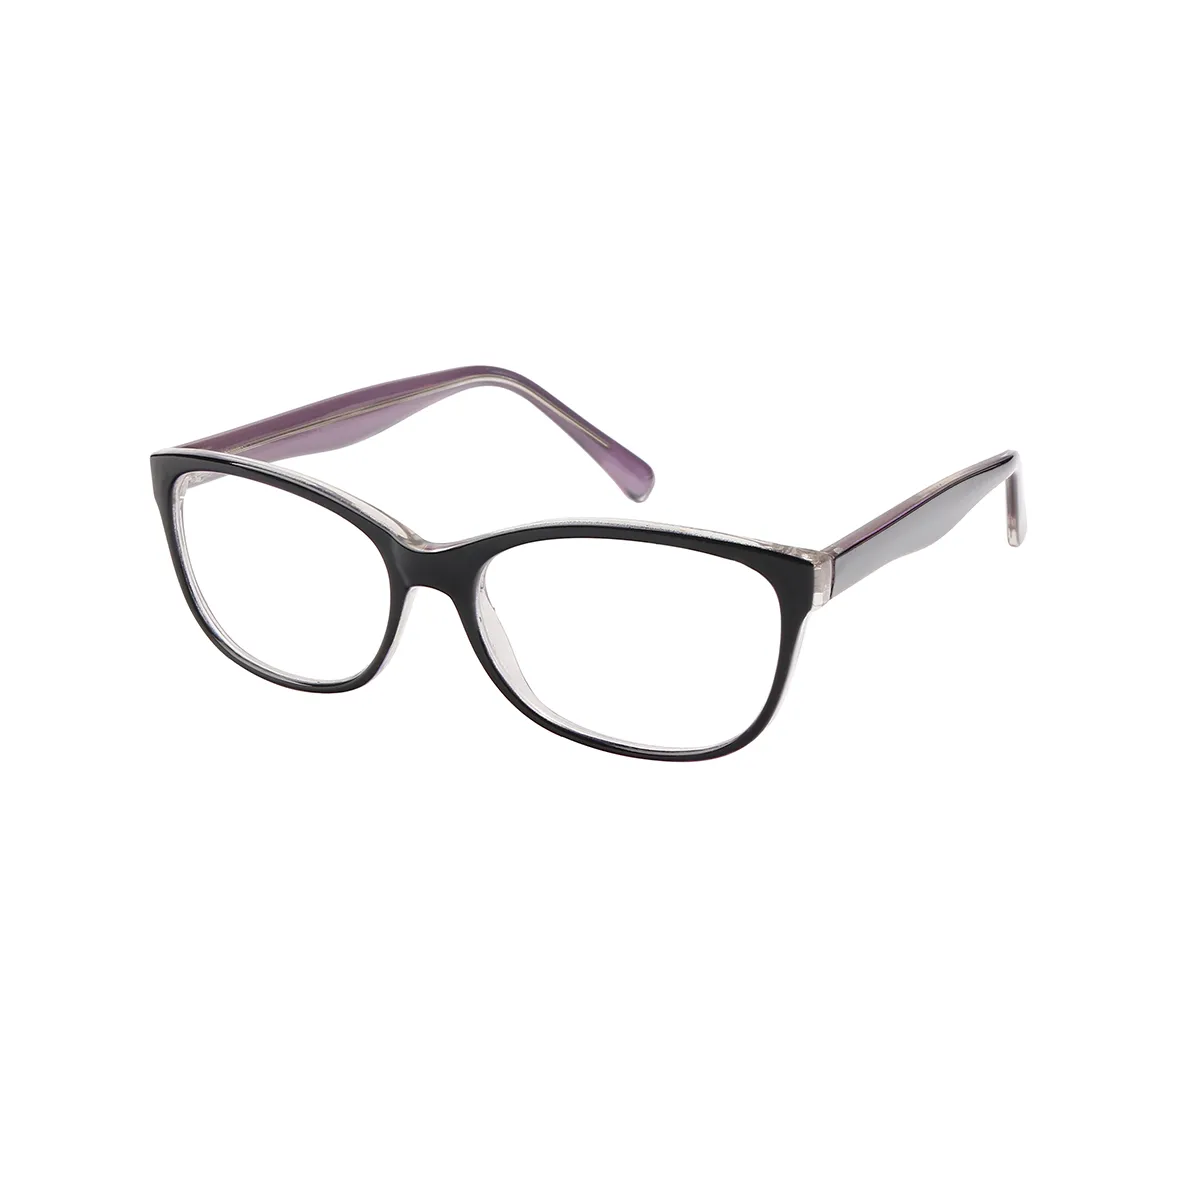 Claribel - Square Black-Purple Glasses for Women - EFE